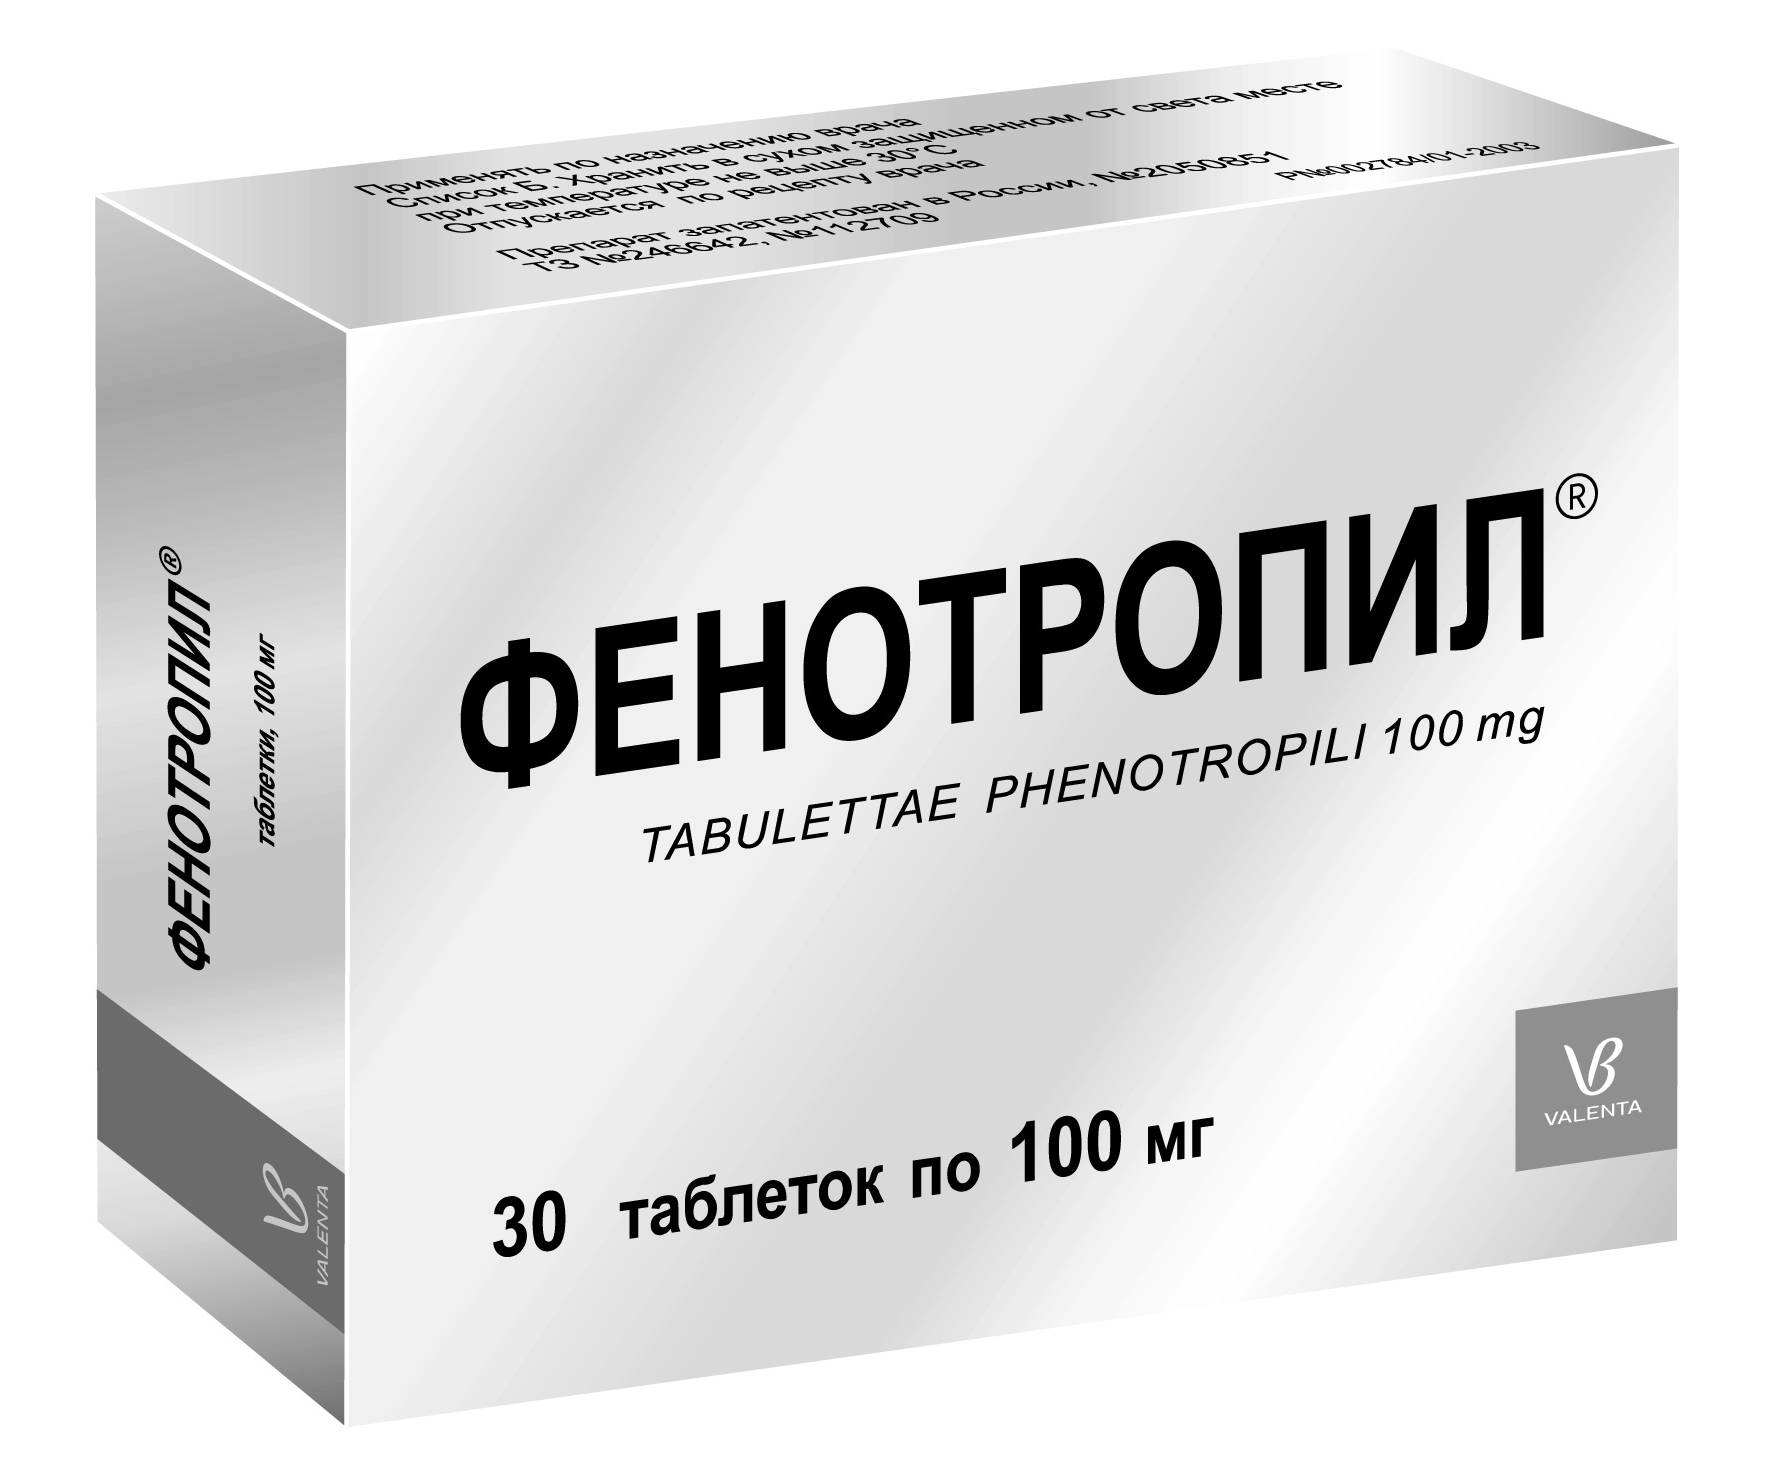 phenylpiracetam side effects